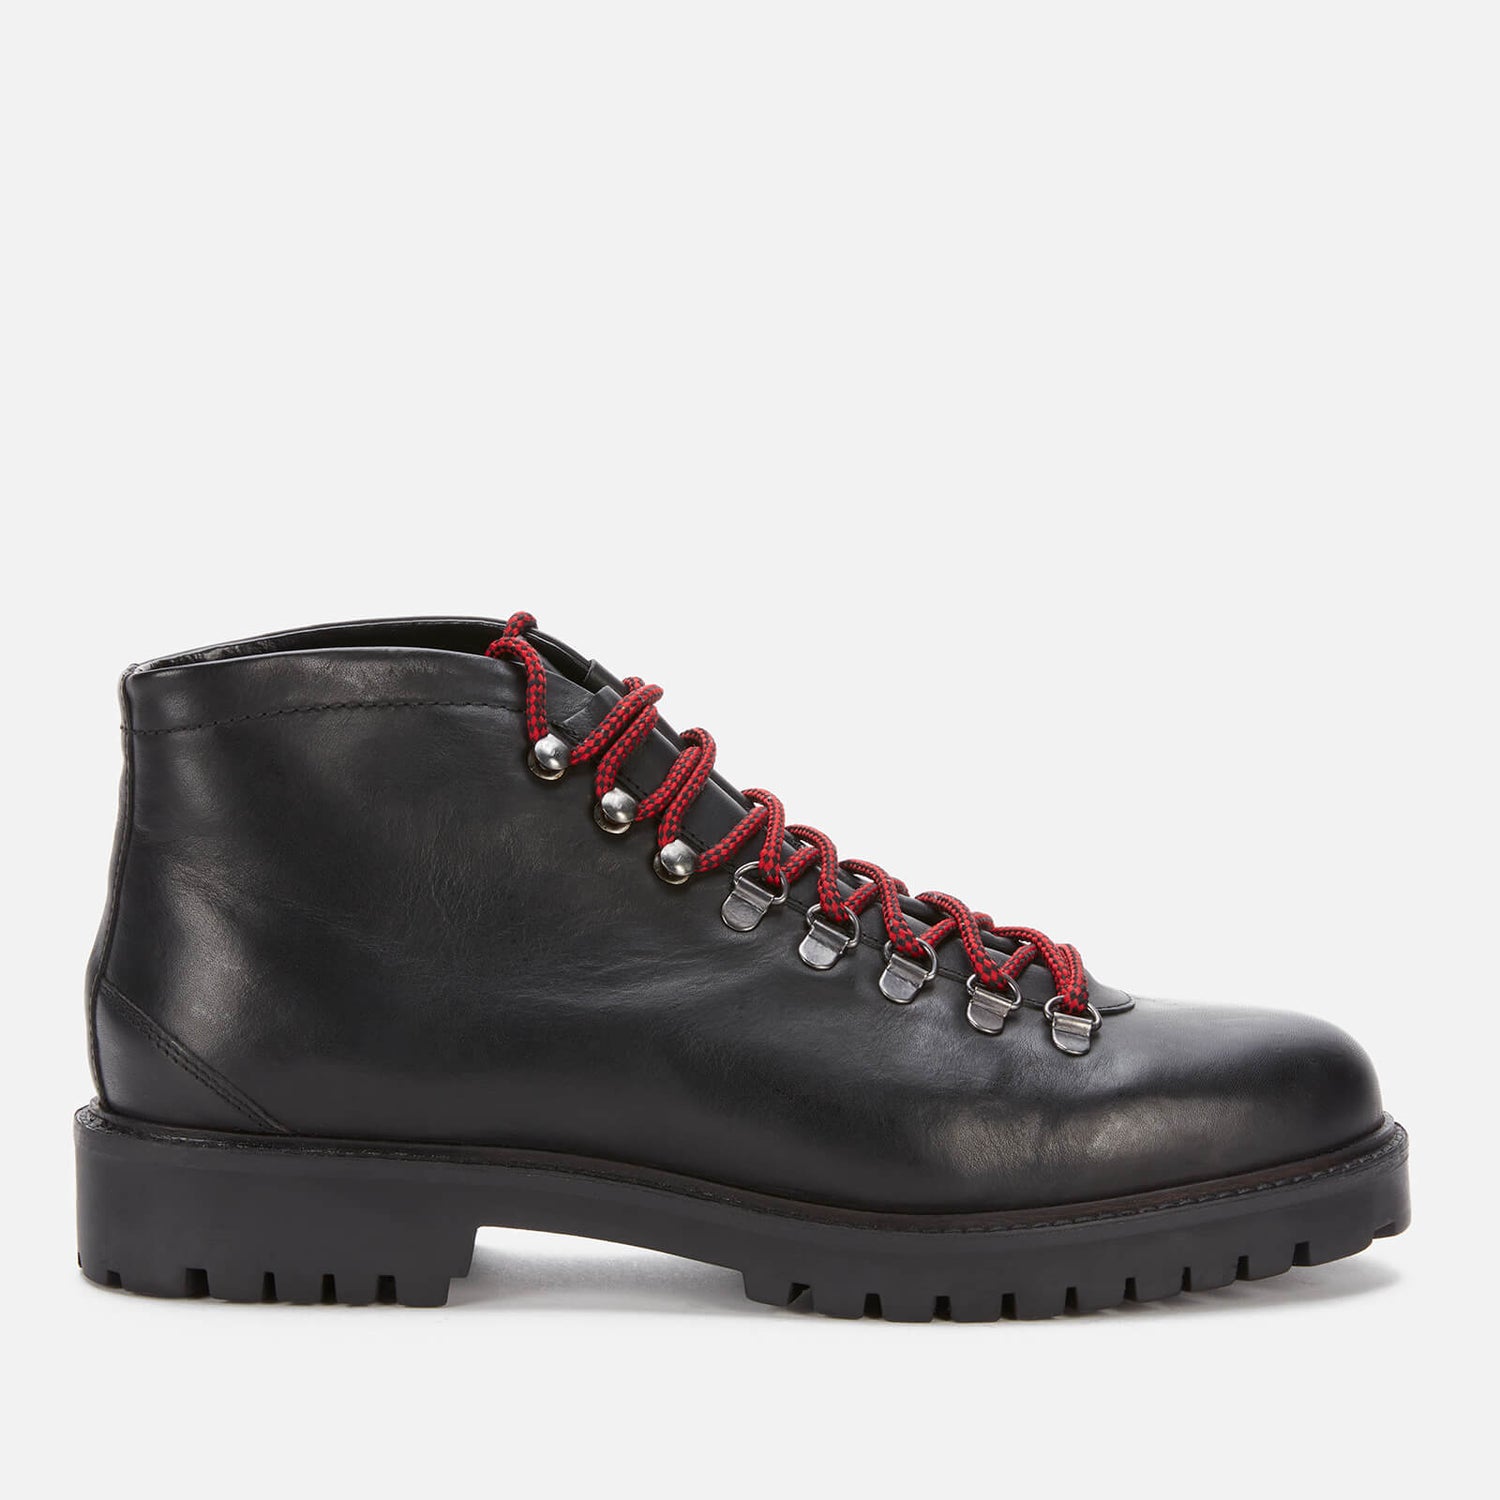 Walk London Men's Sean Leather Hiking Style Boots - Black - UK 7